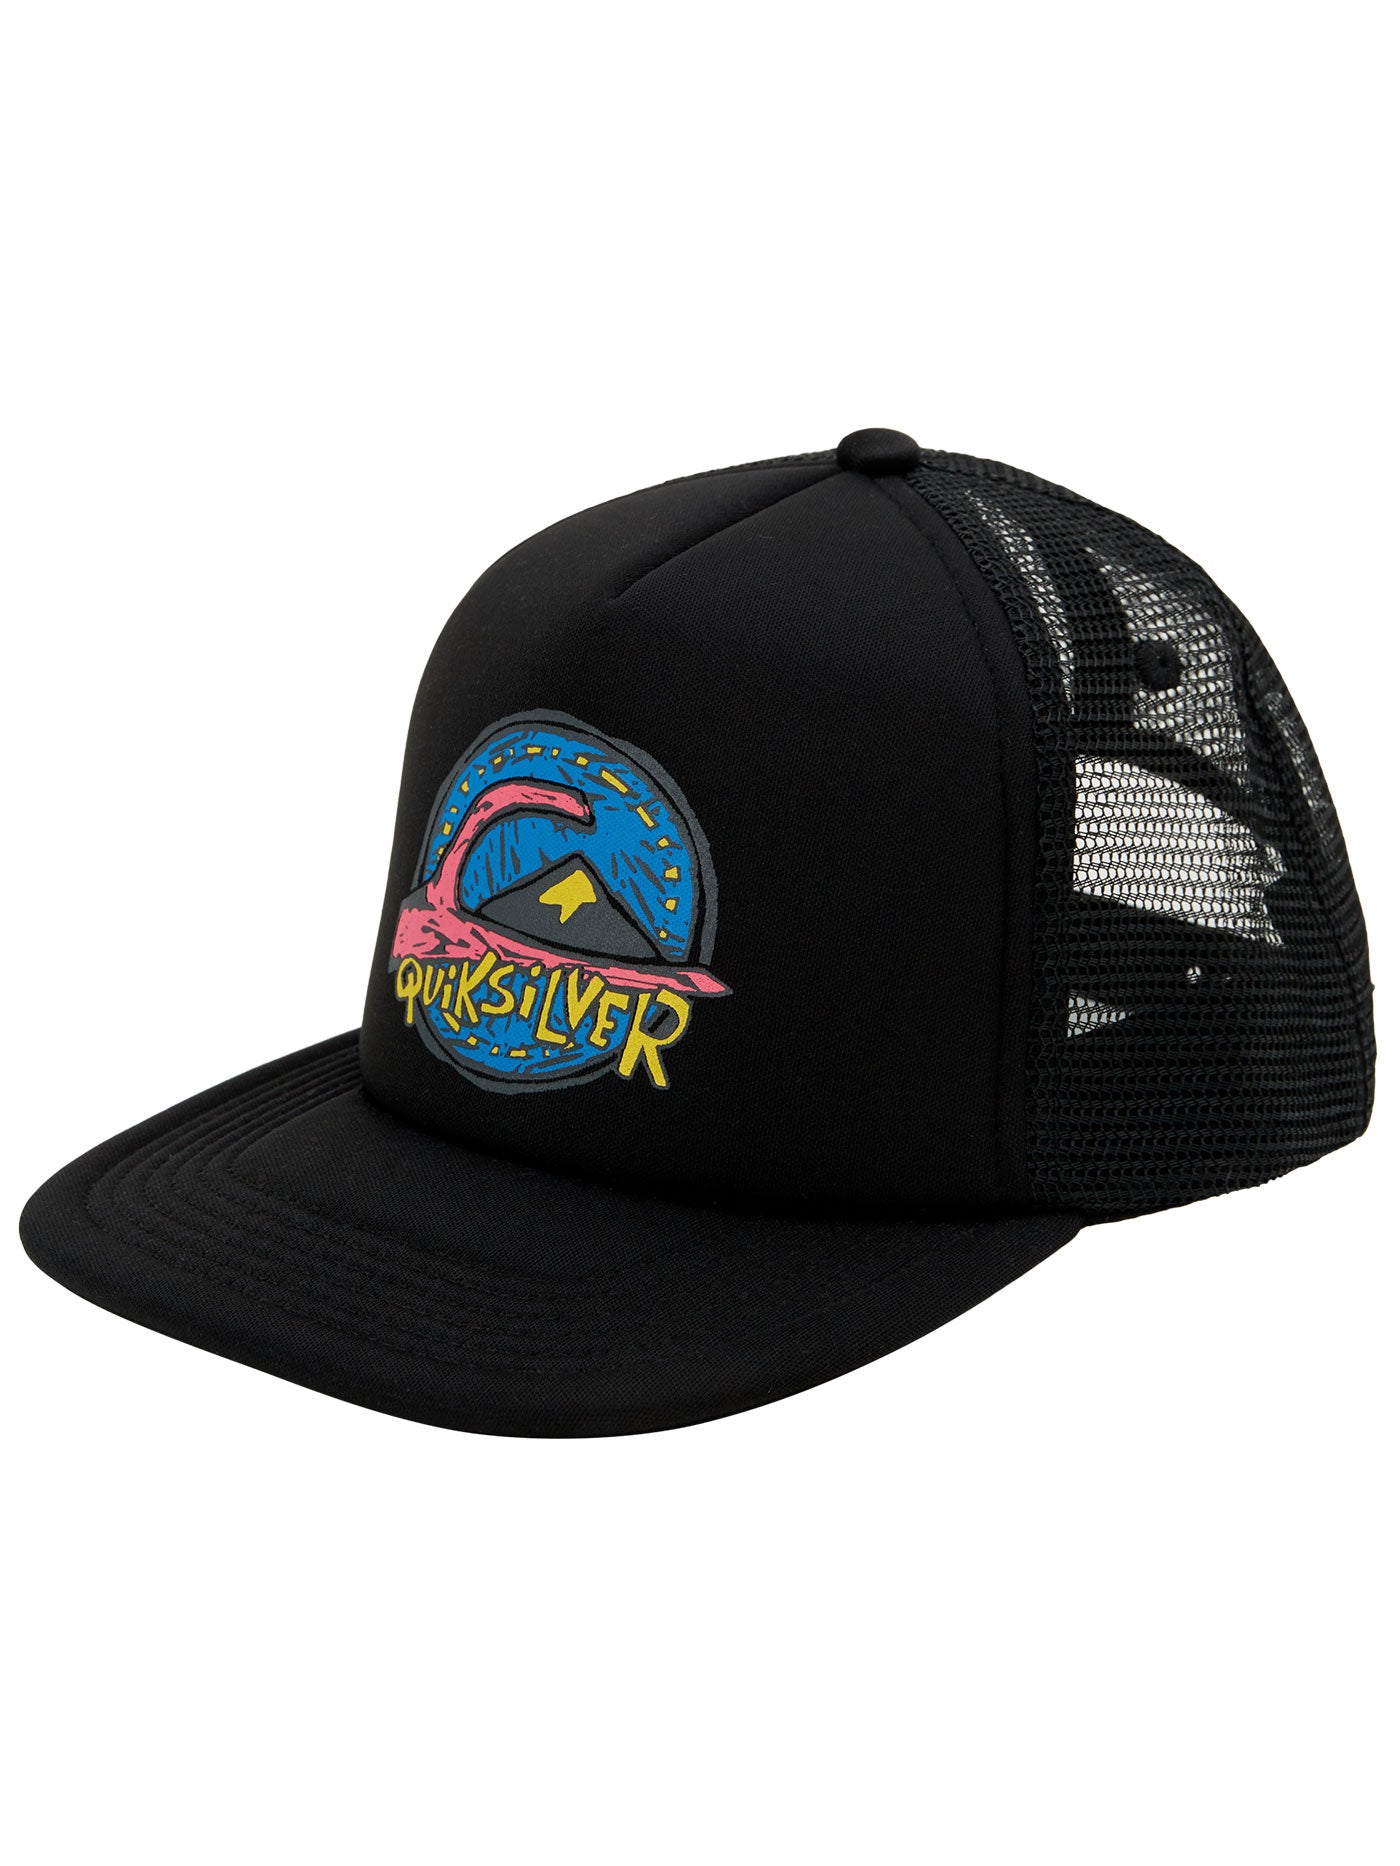 Quiksilver Tailgater JB Trucker Snapback Hat